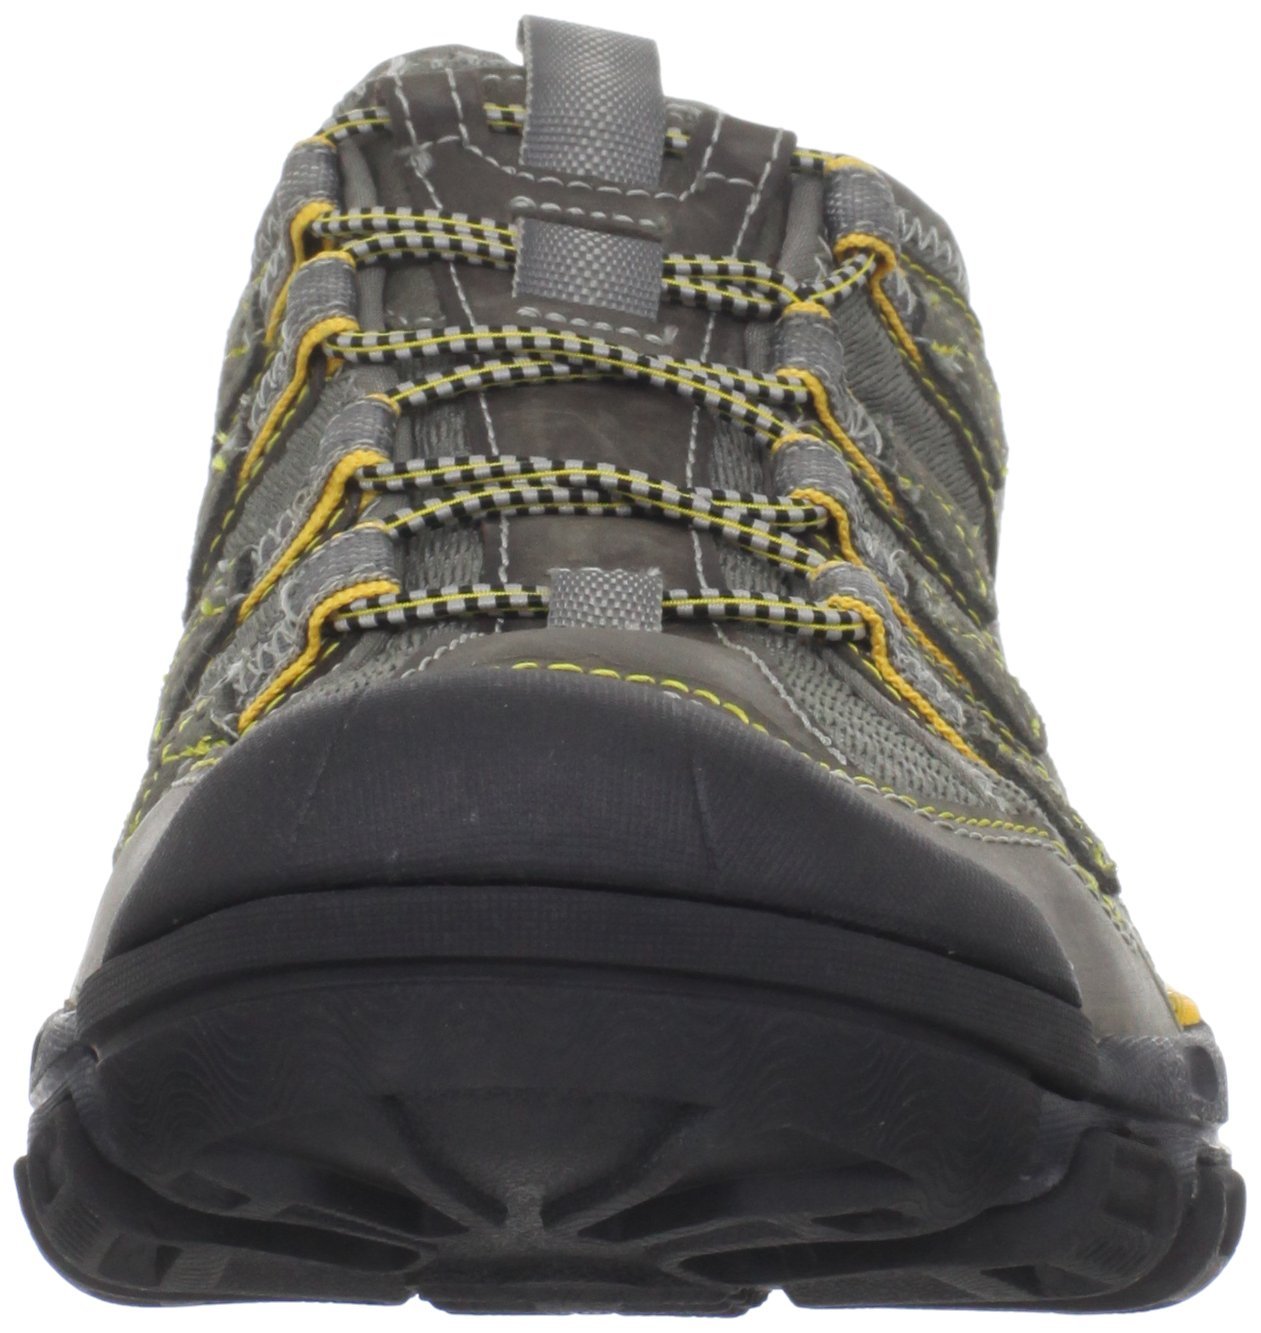 Hiking Shoes Here: Skechers Men's Gander Barkin Hiking Shoe